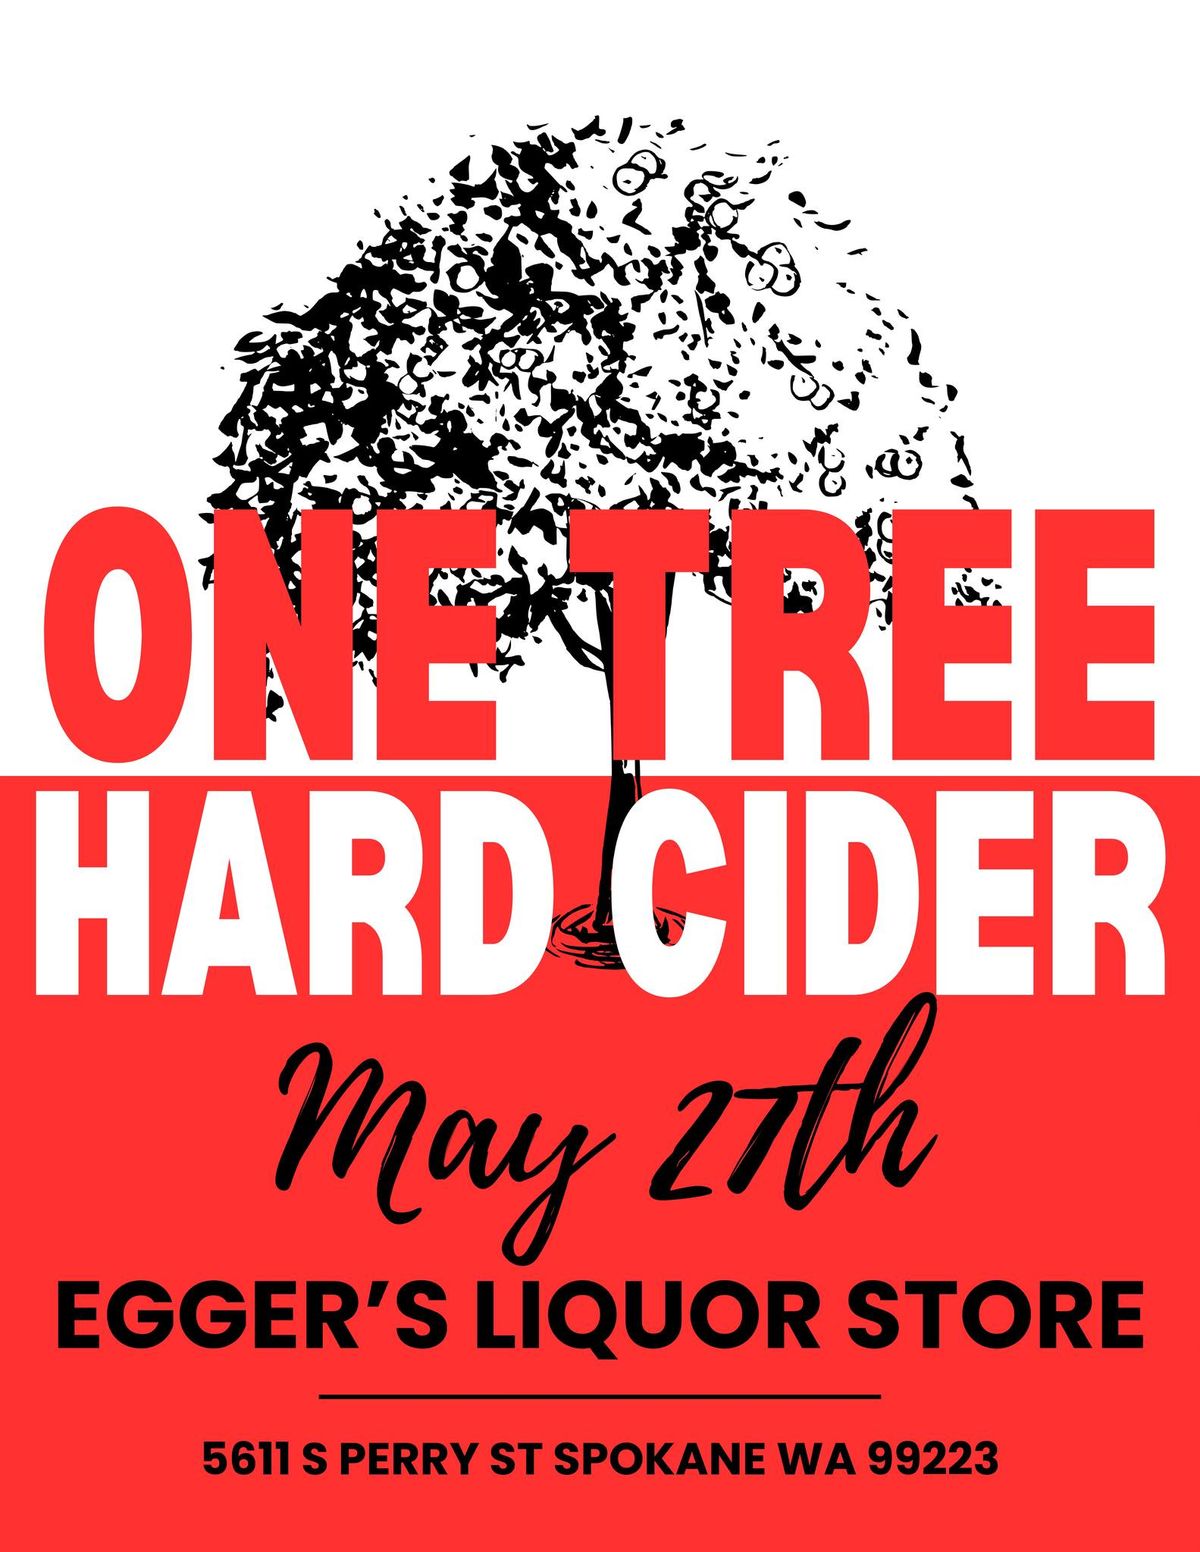 One tree Cider Event @ Egger's Liquor Store